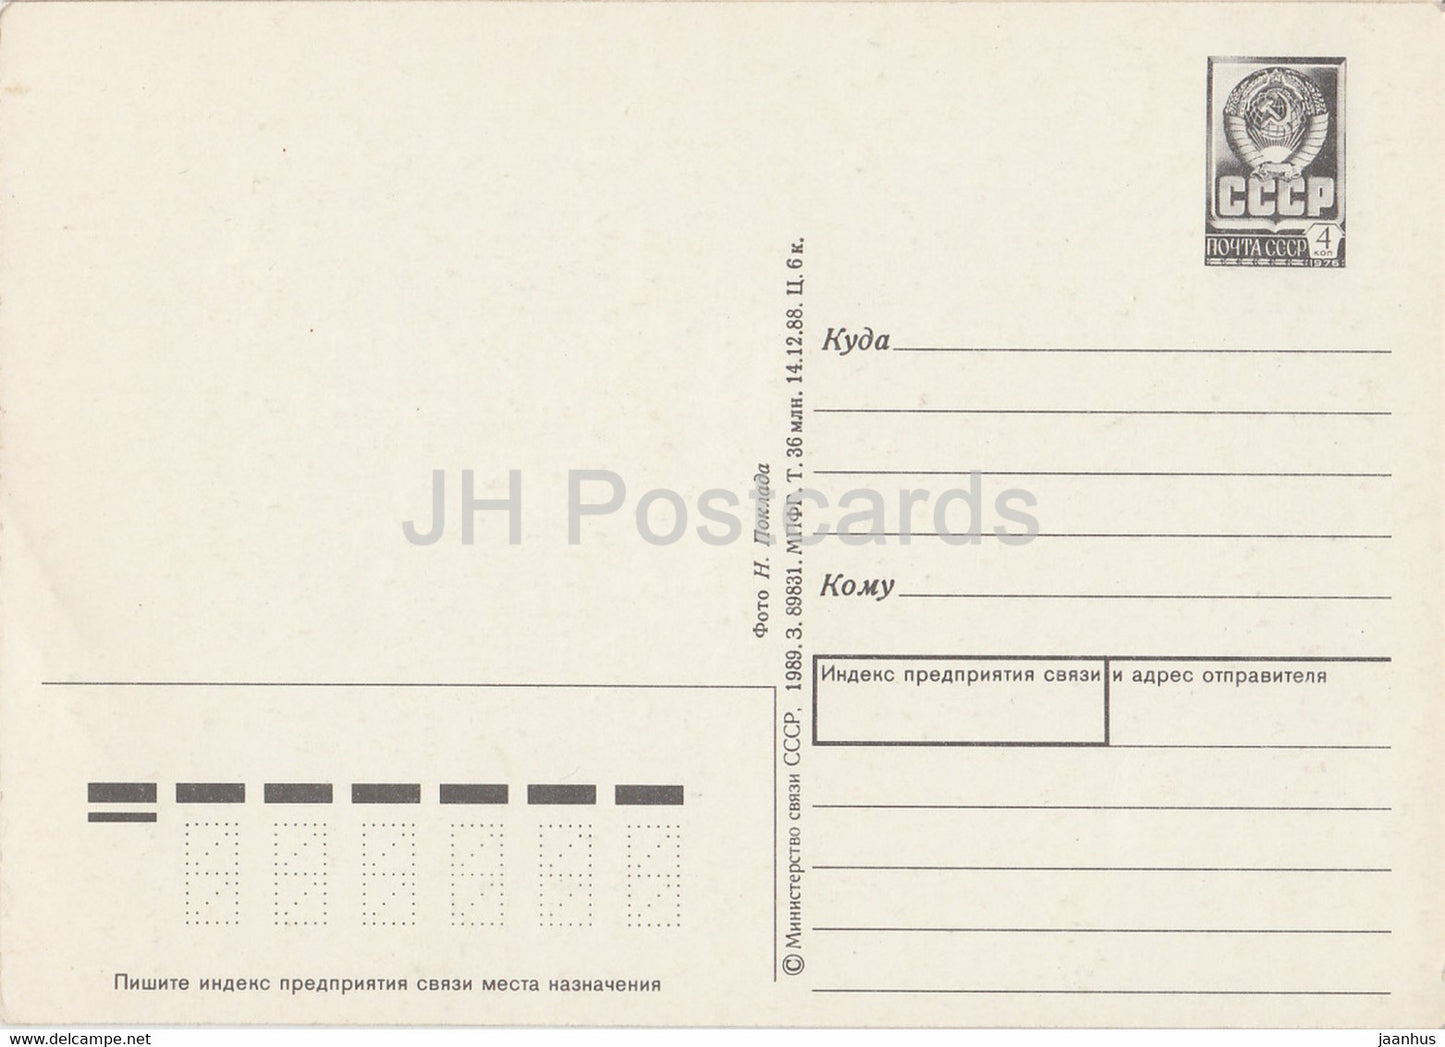 New Year greeting Card by N. Poklada - Ded Moroz - Santa Claus - bell - postal stationery - 1989 - Russia USSR - unused